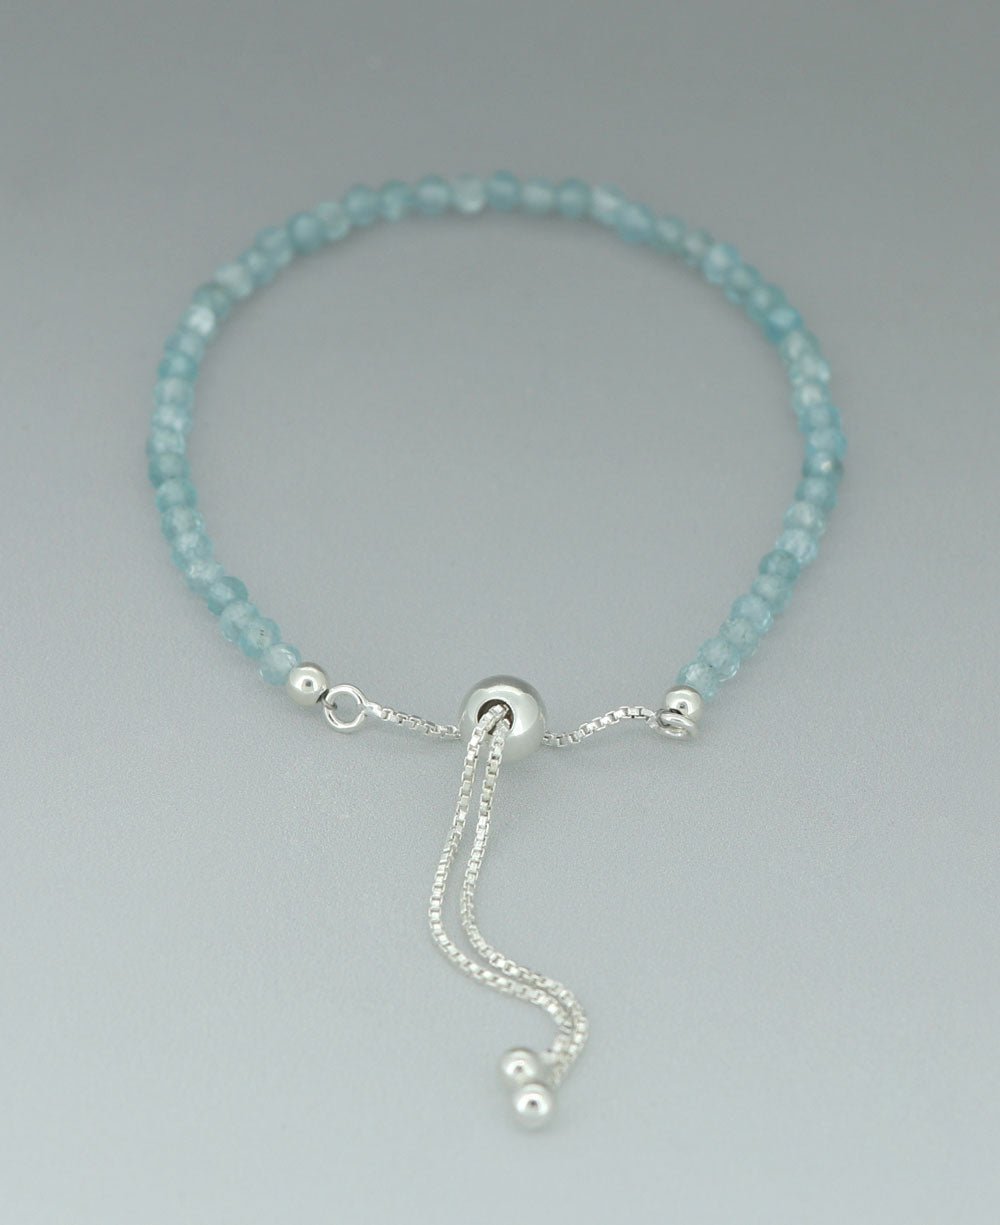 Adjustable Sterling Silver Bolo Bracelet with Dainty Gemstone Beads - Bracelets Apatite